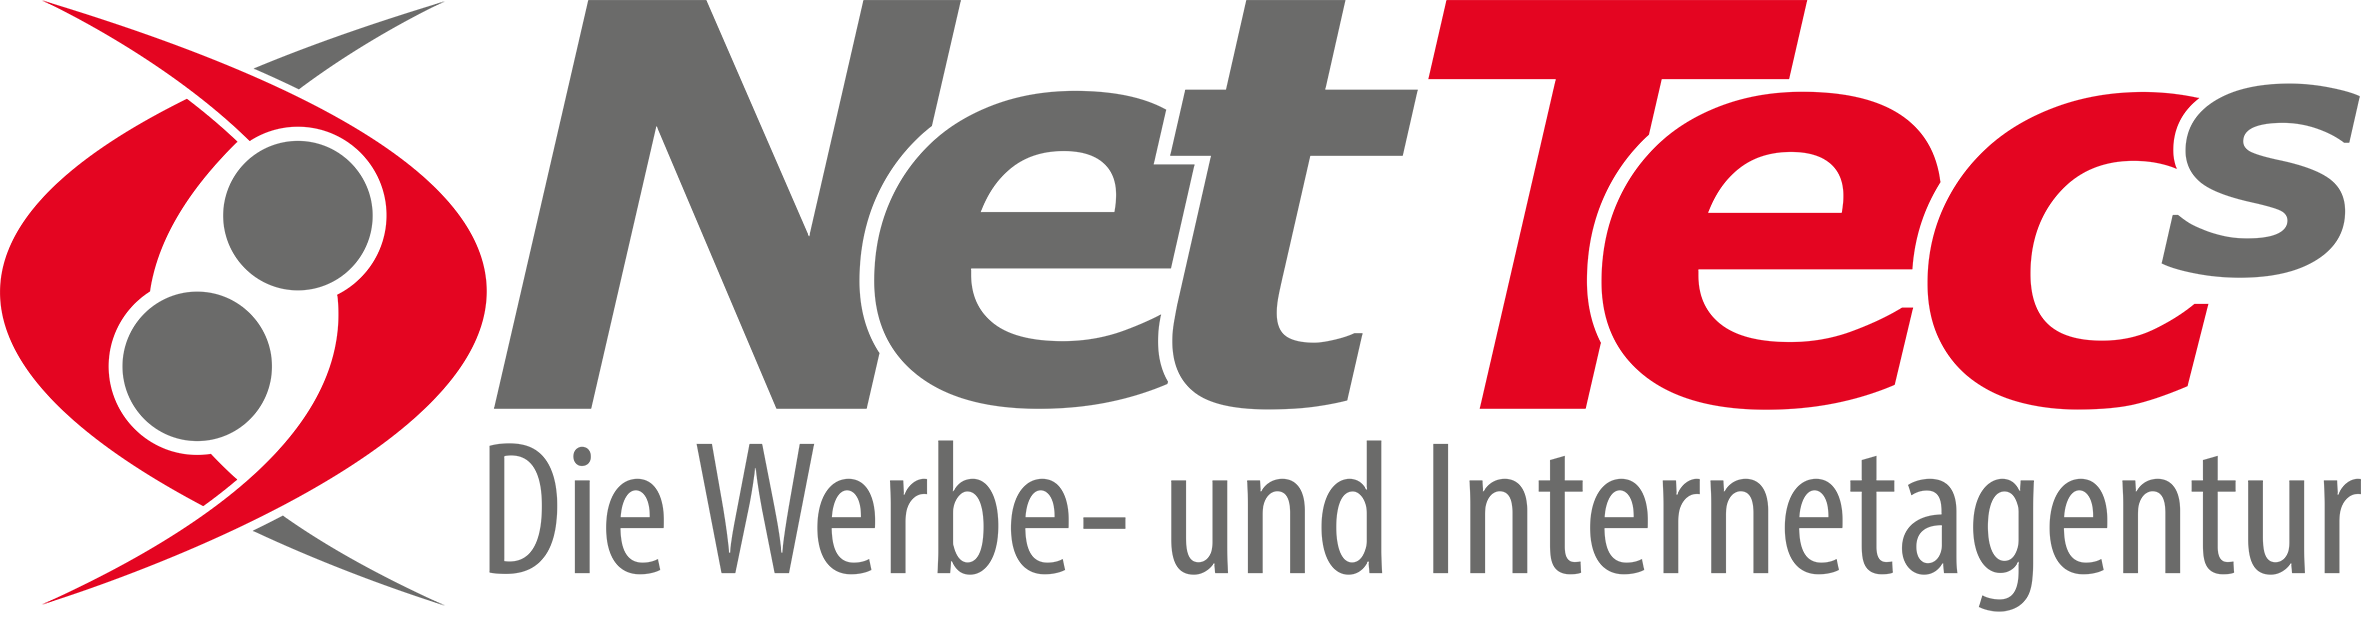 nettecs logo 2015